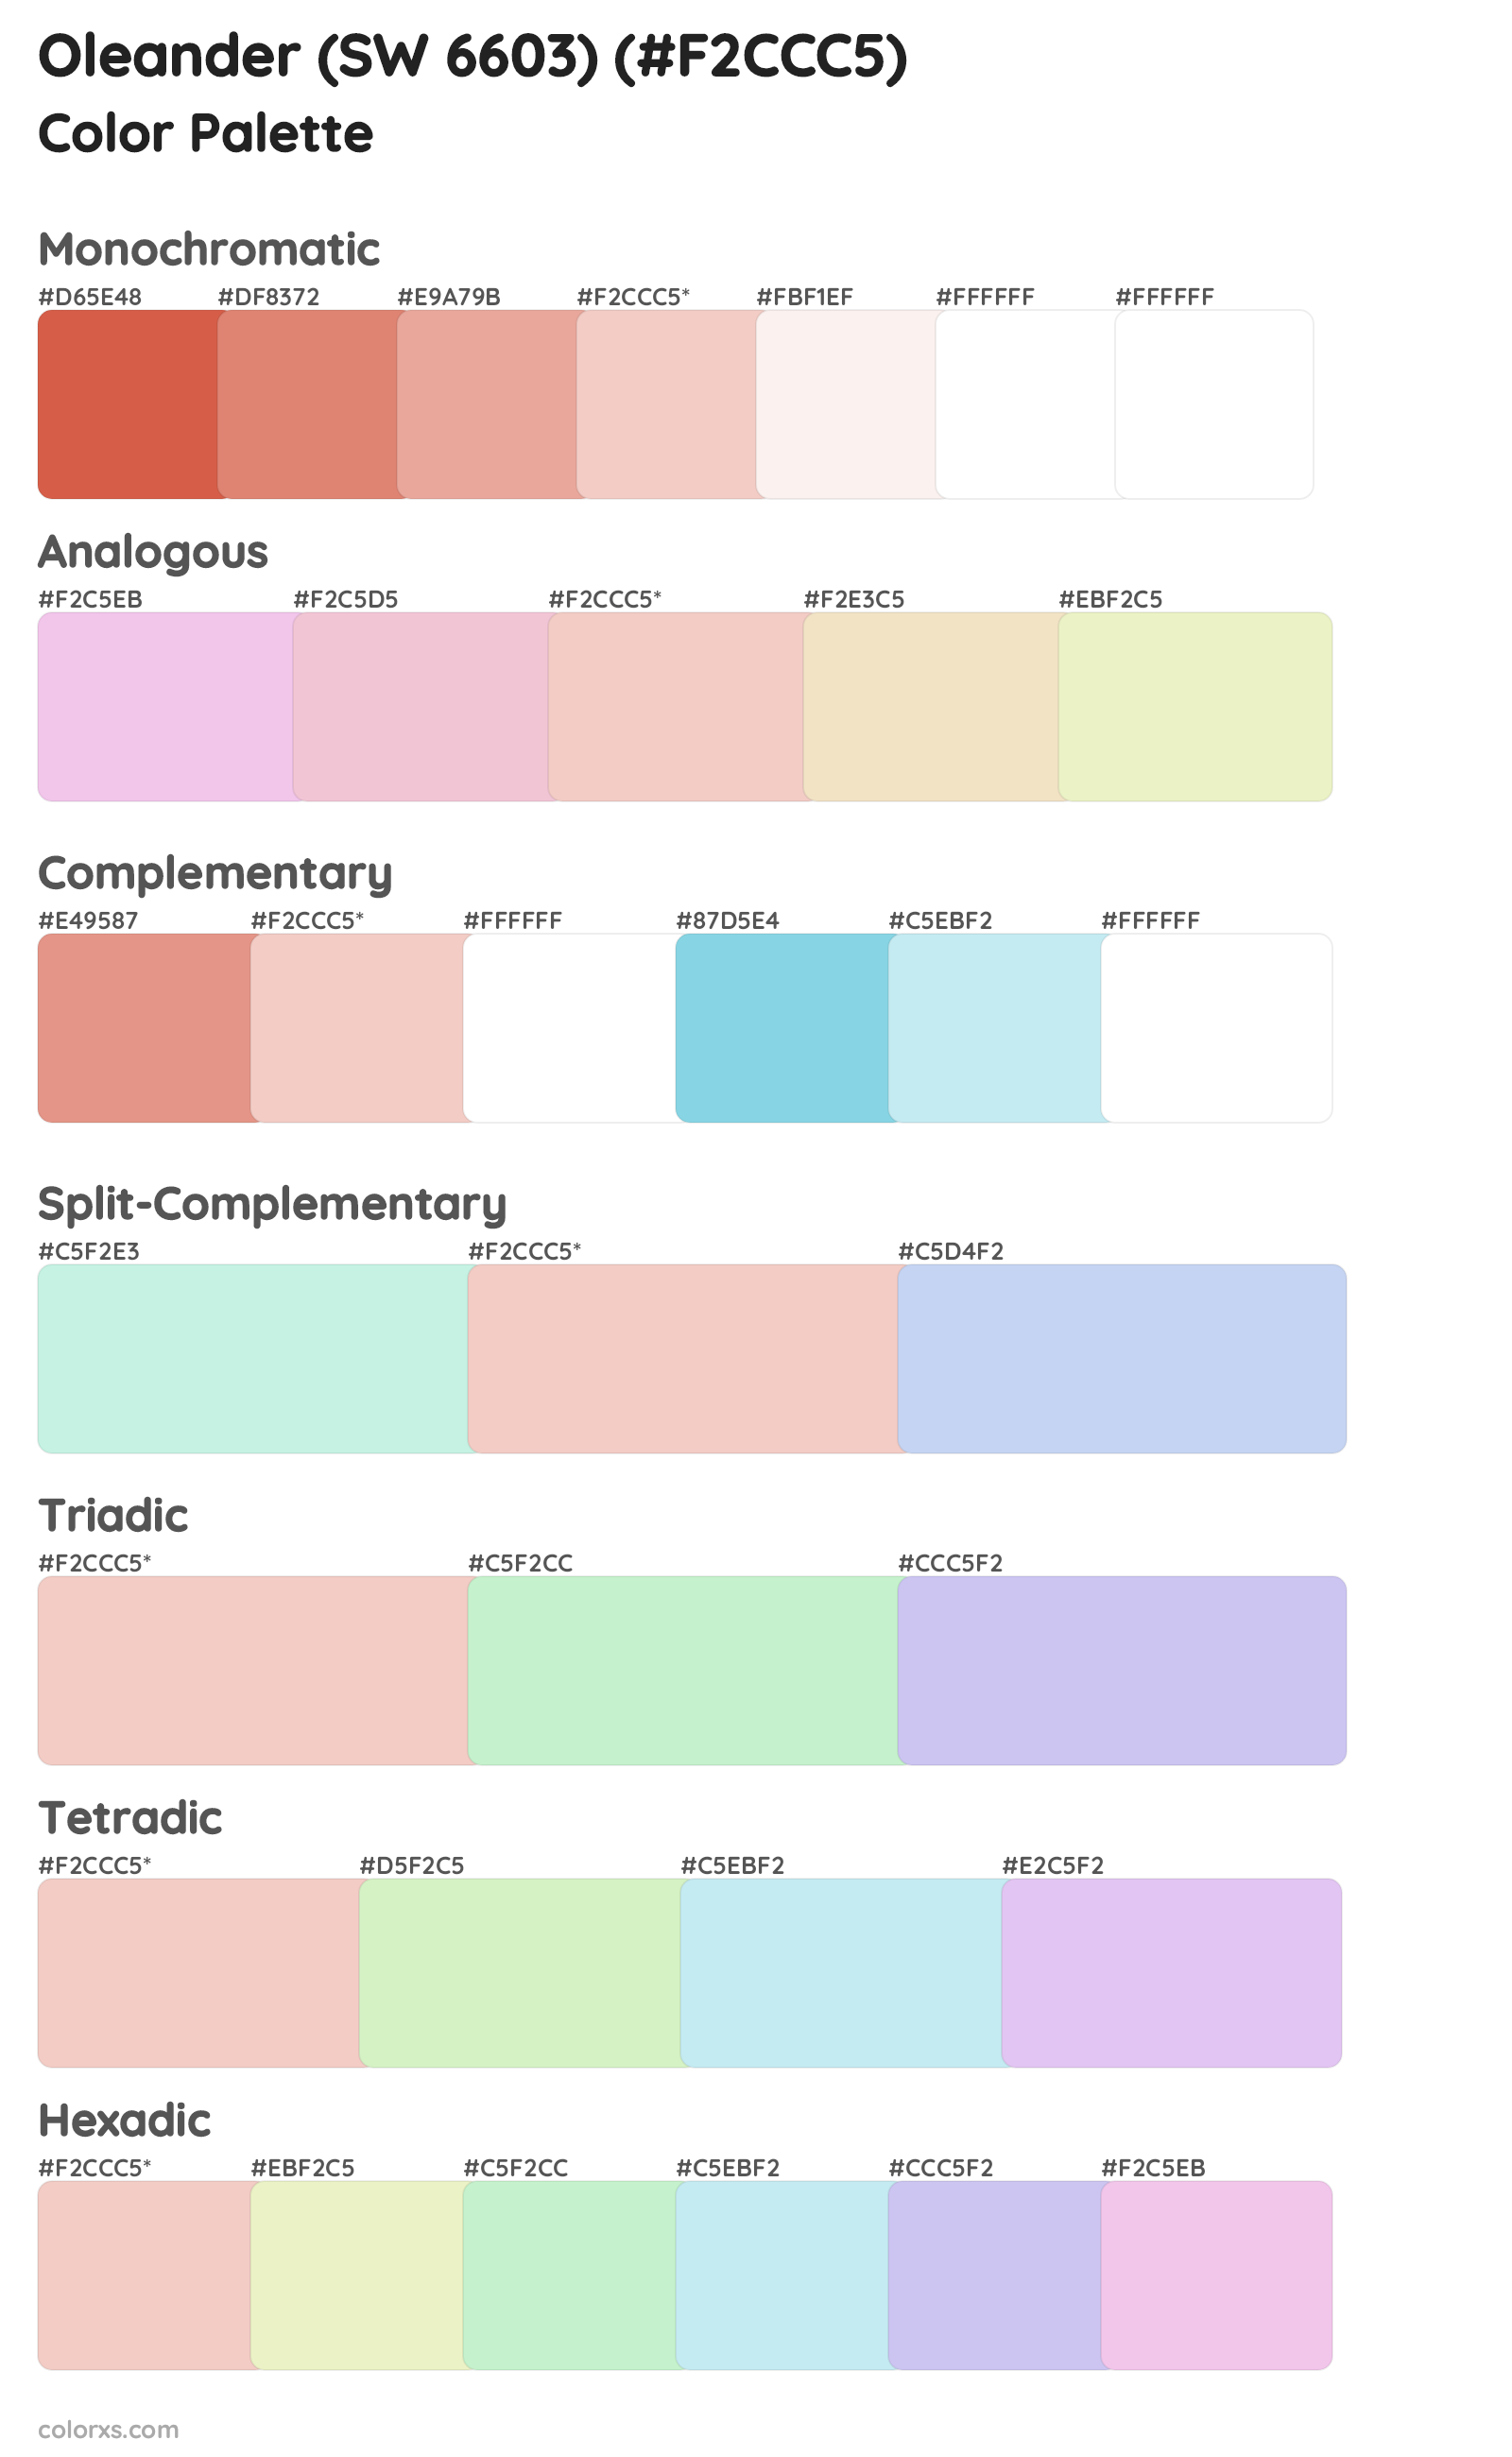 Oleander (SW 6603) Color Scheme Palettes